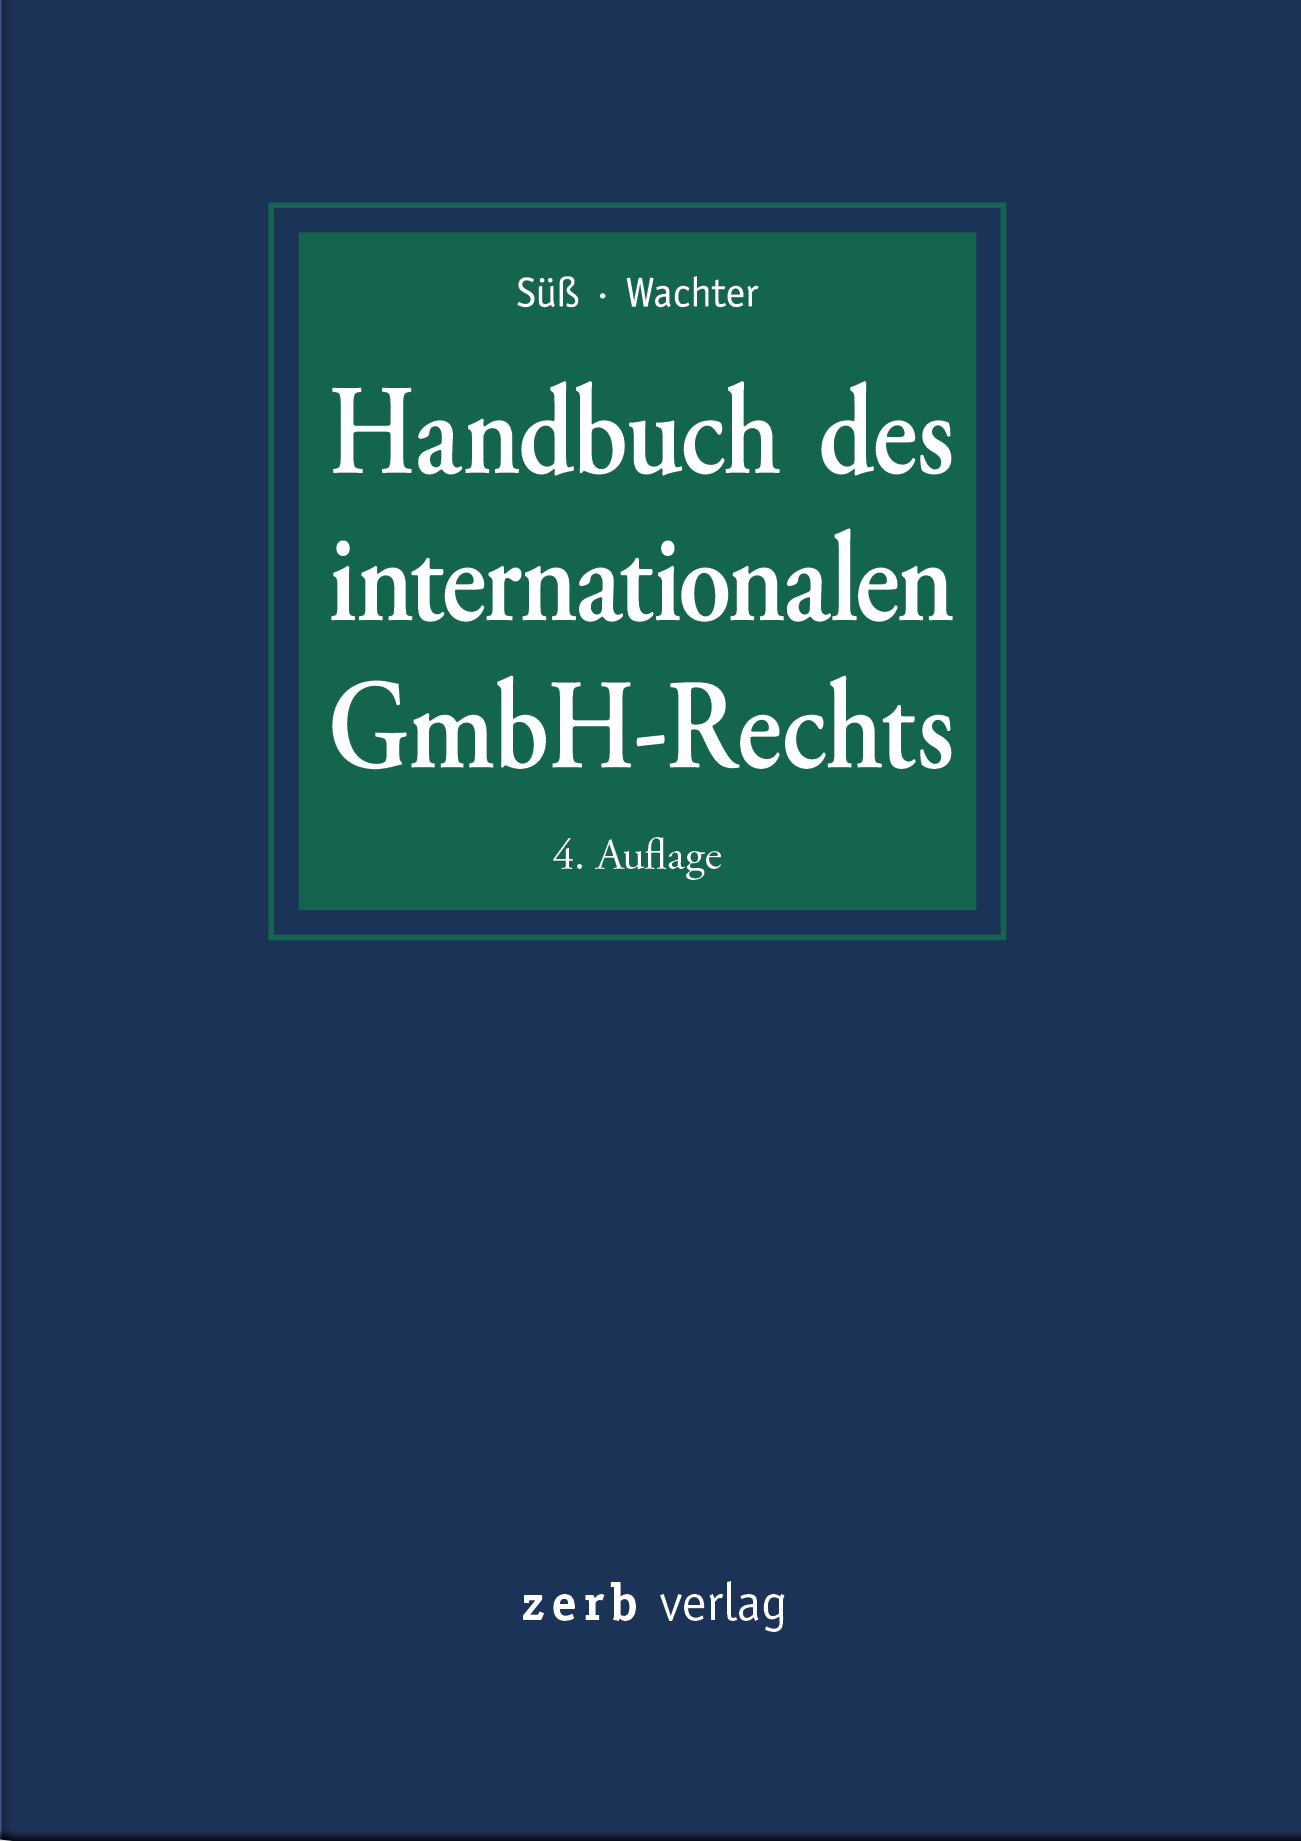 Abbildung: Handbuch des internationalen GmbH-Rechts